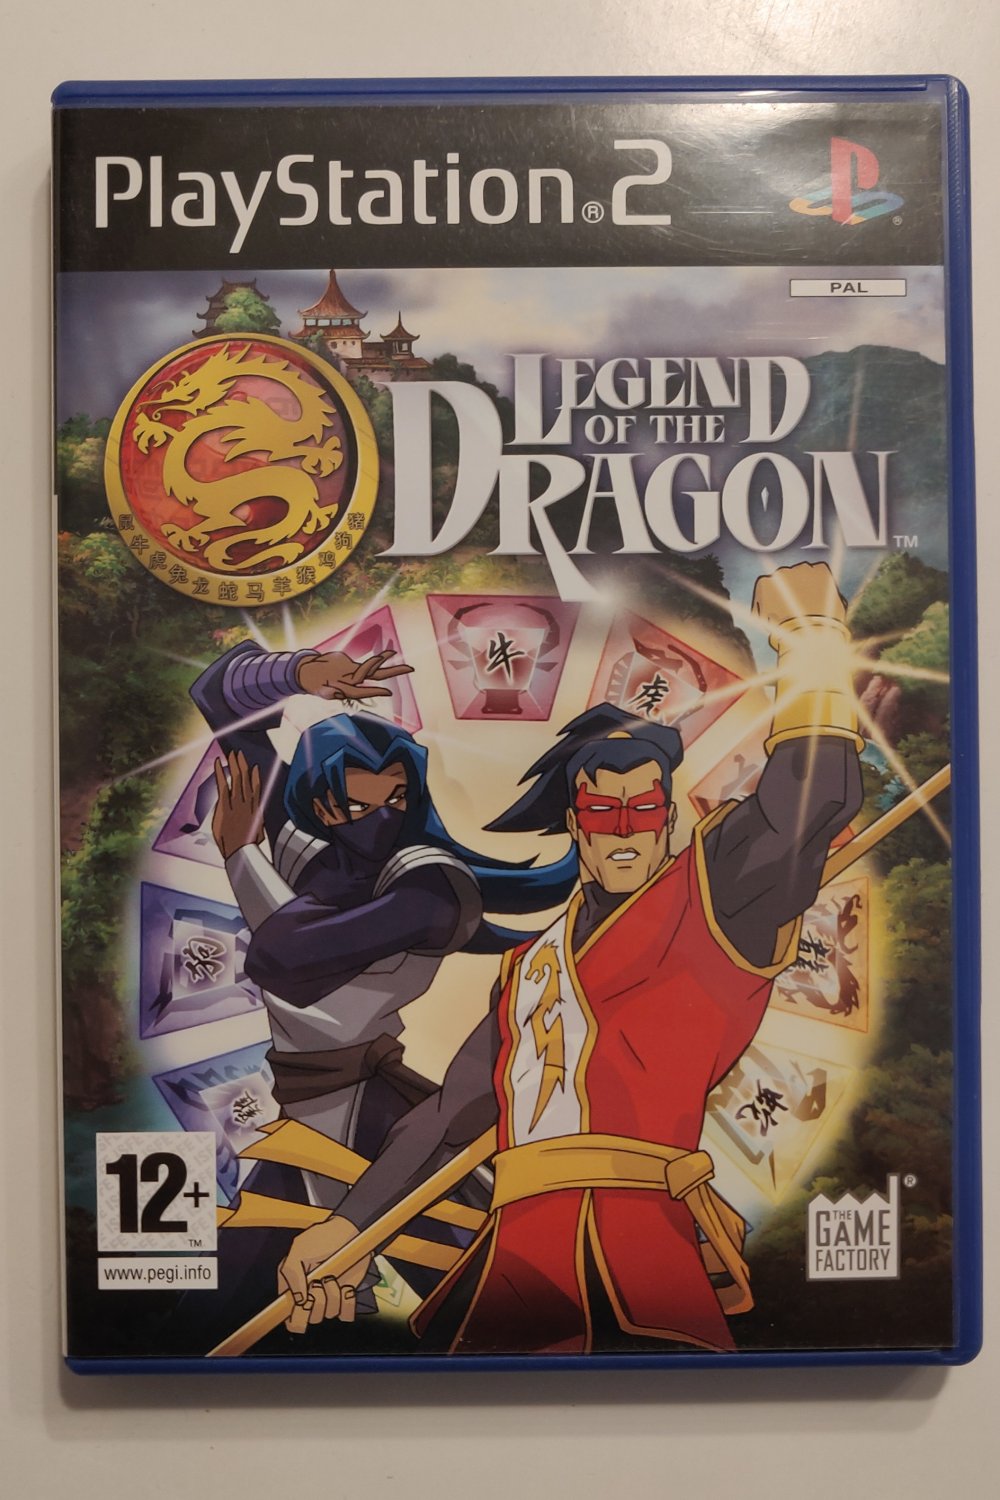 Legend of the Dragon (Playstation 2 PAL) (CIB)